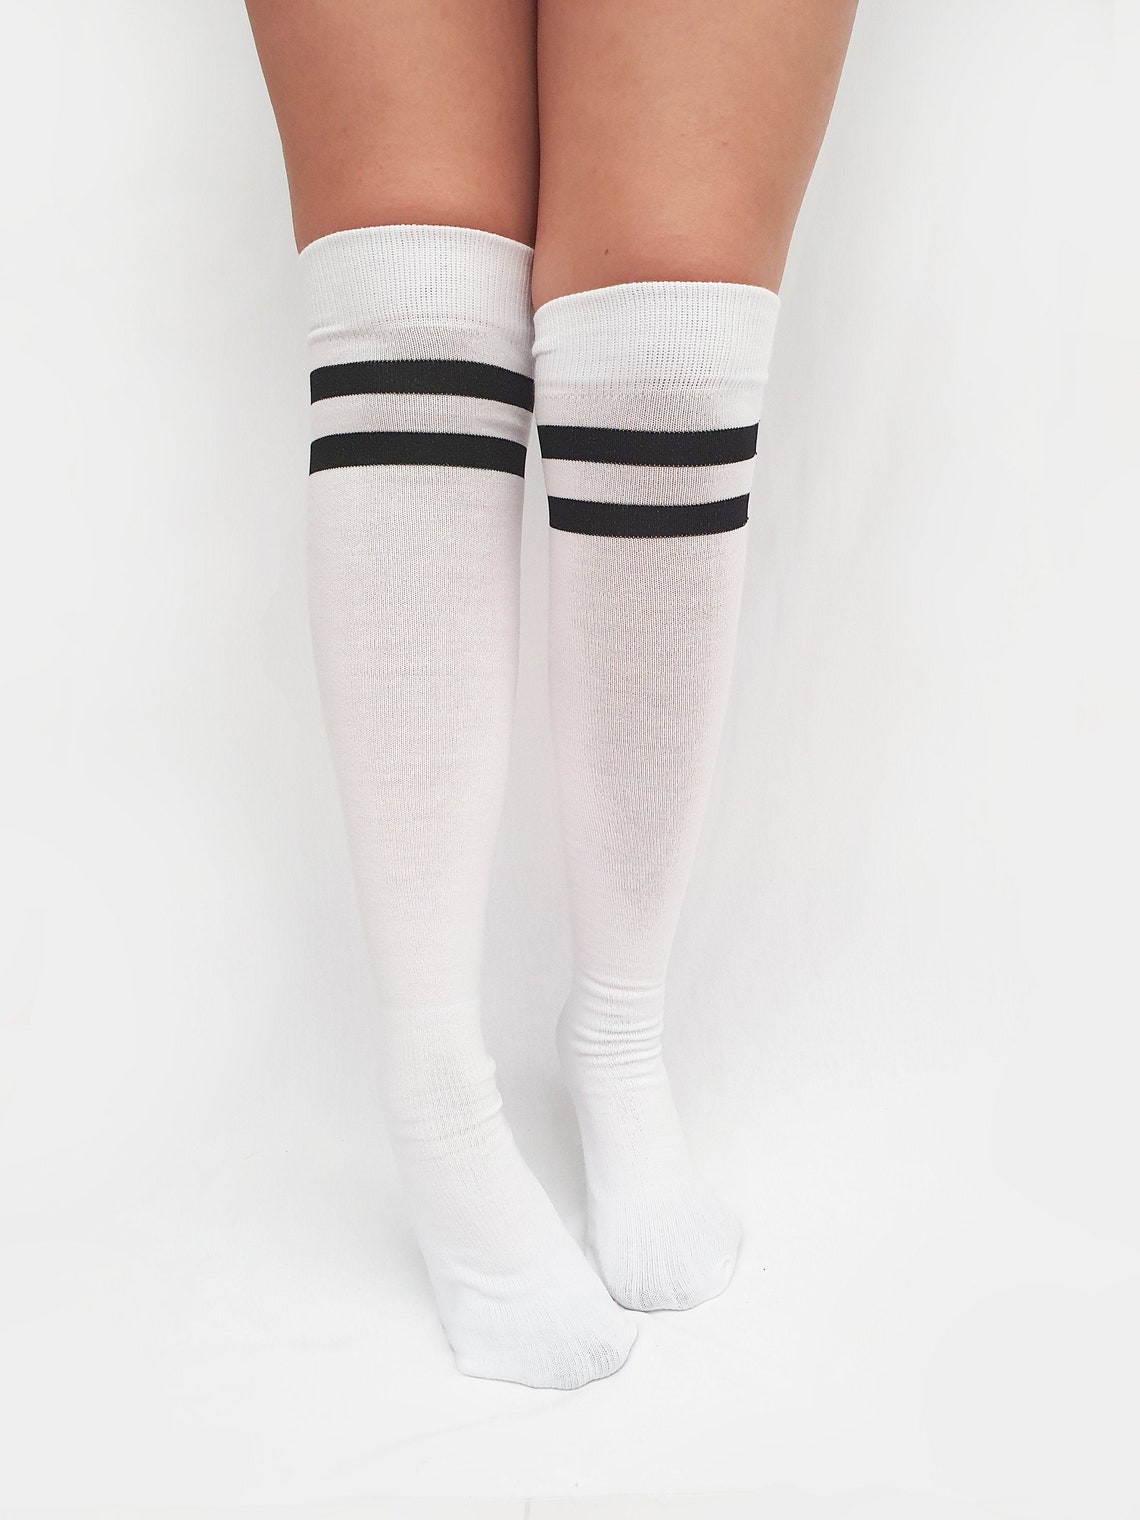 White with Black Lines High Socks | Etsy